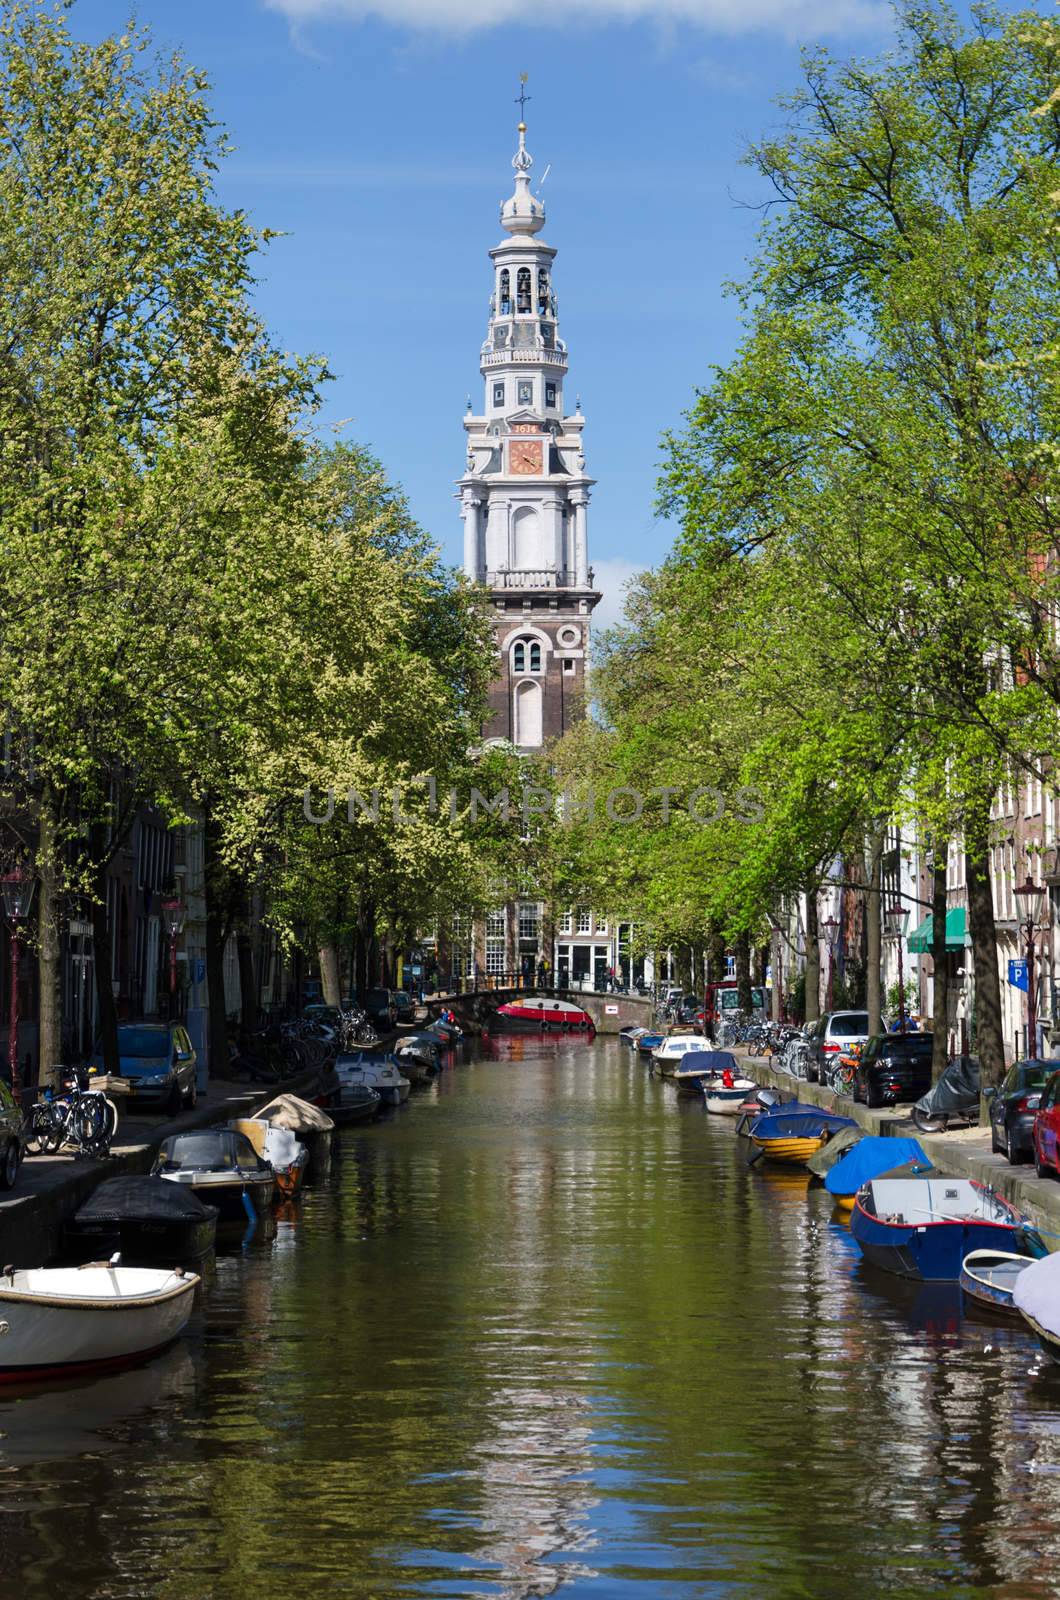 Zuiderkerk (Southern Church) in Amsterdam, The Netherlands